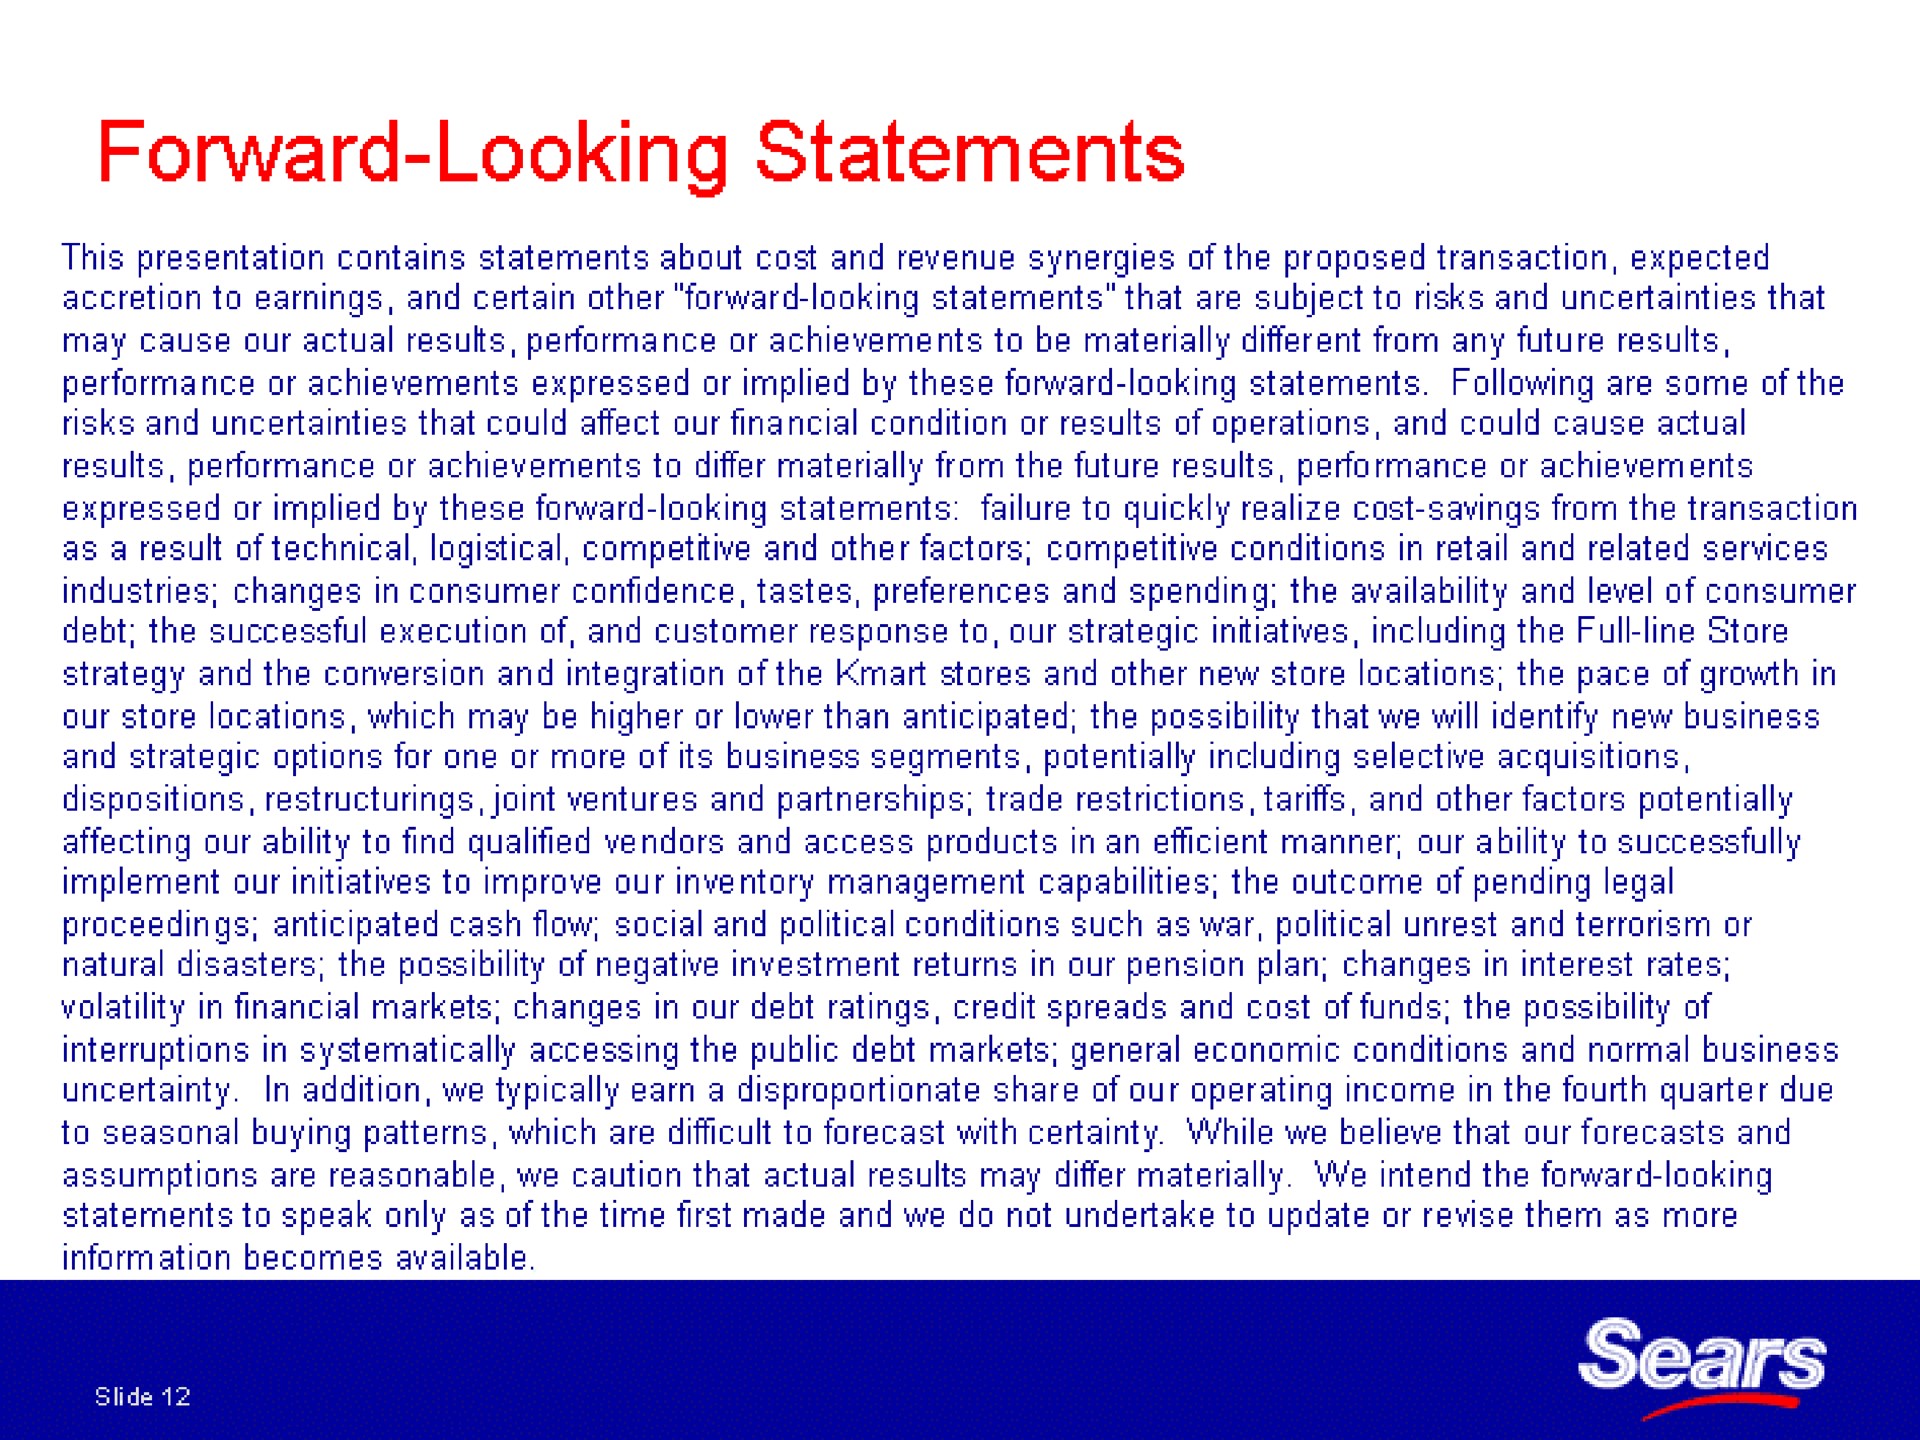 forward looking statements | Sears